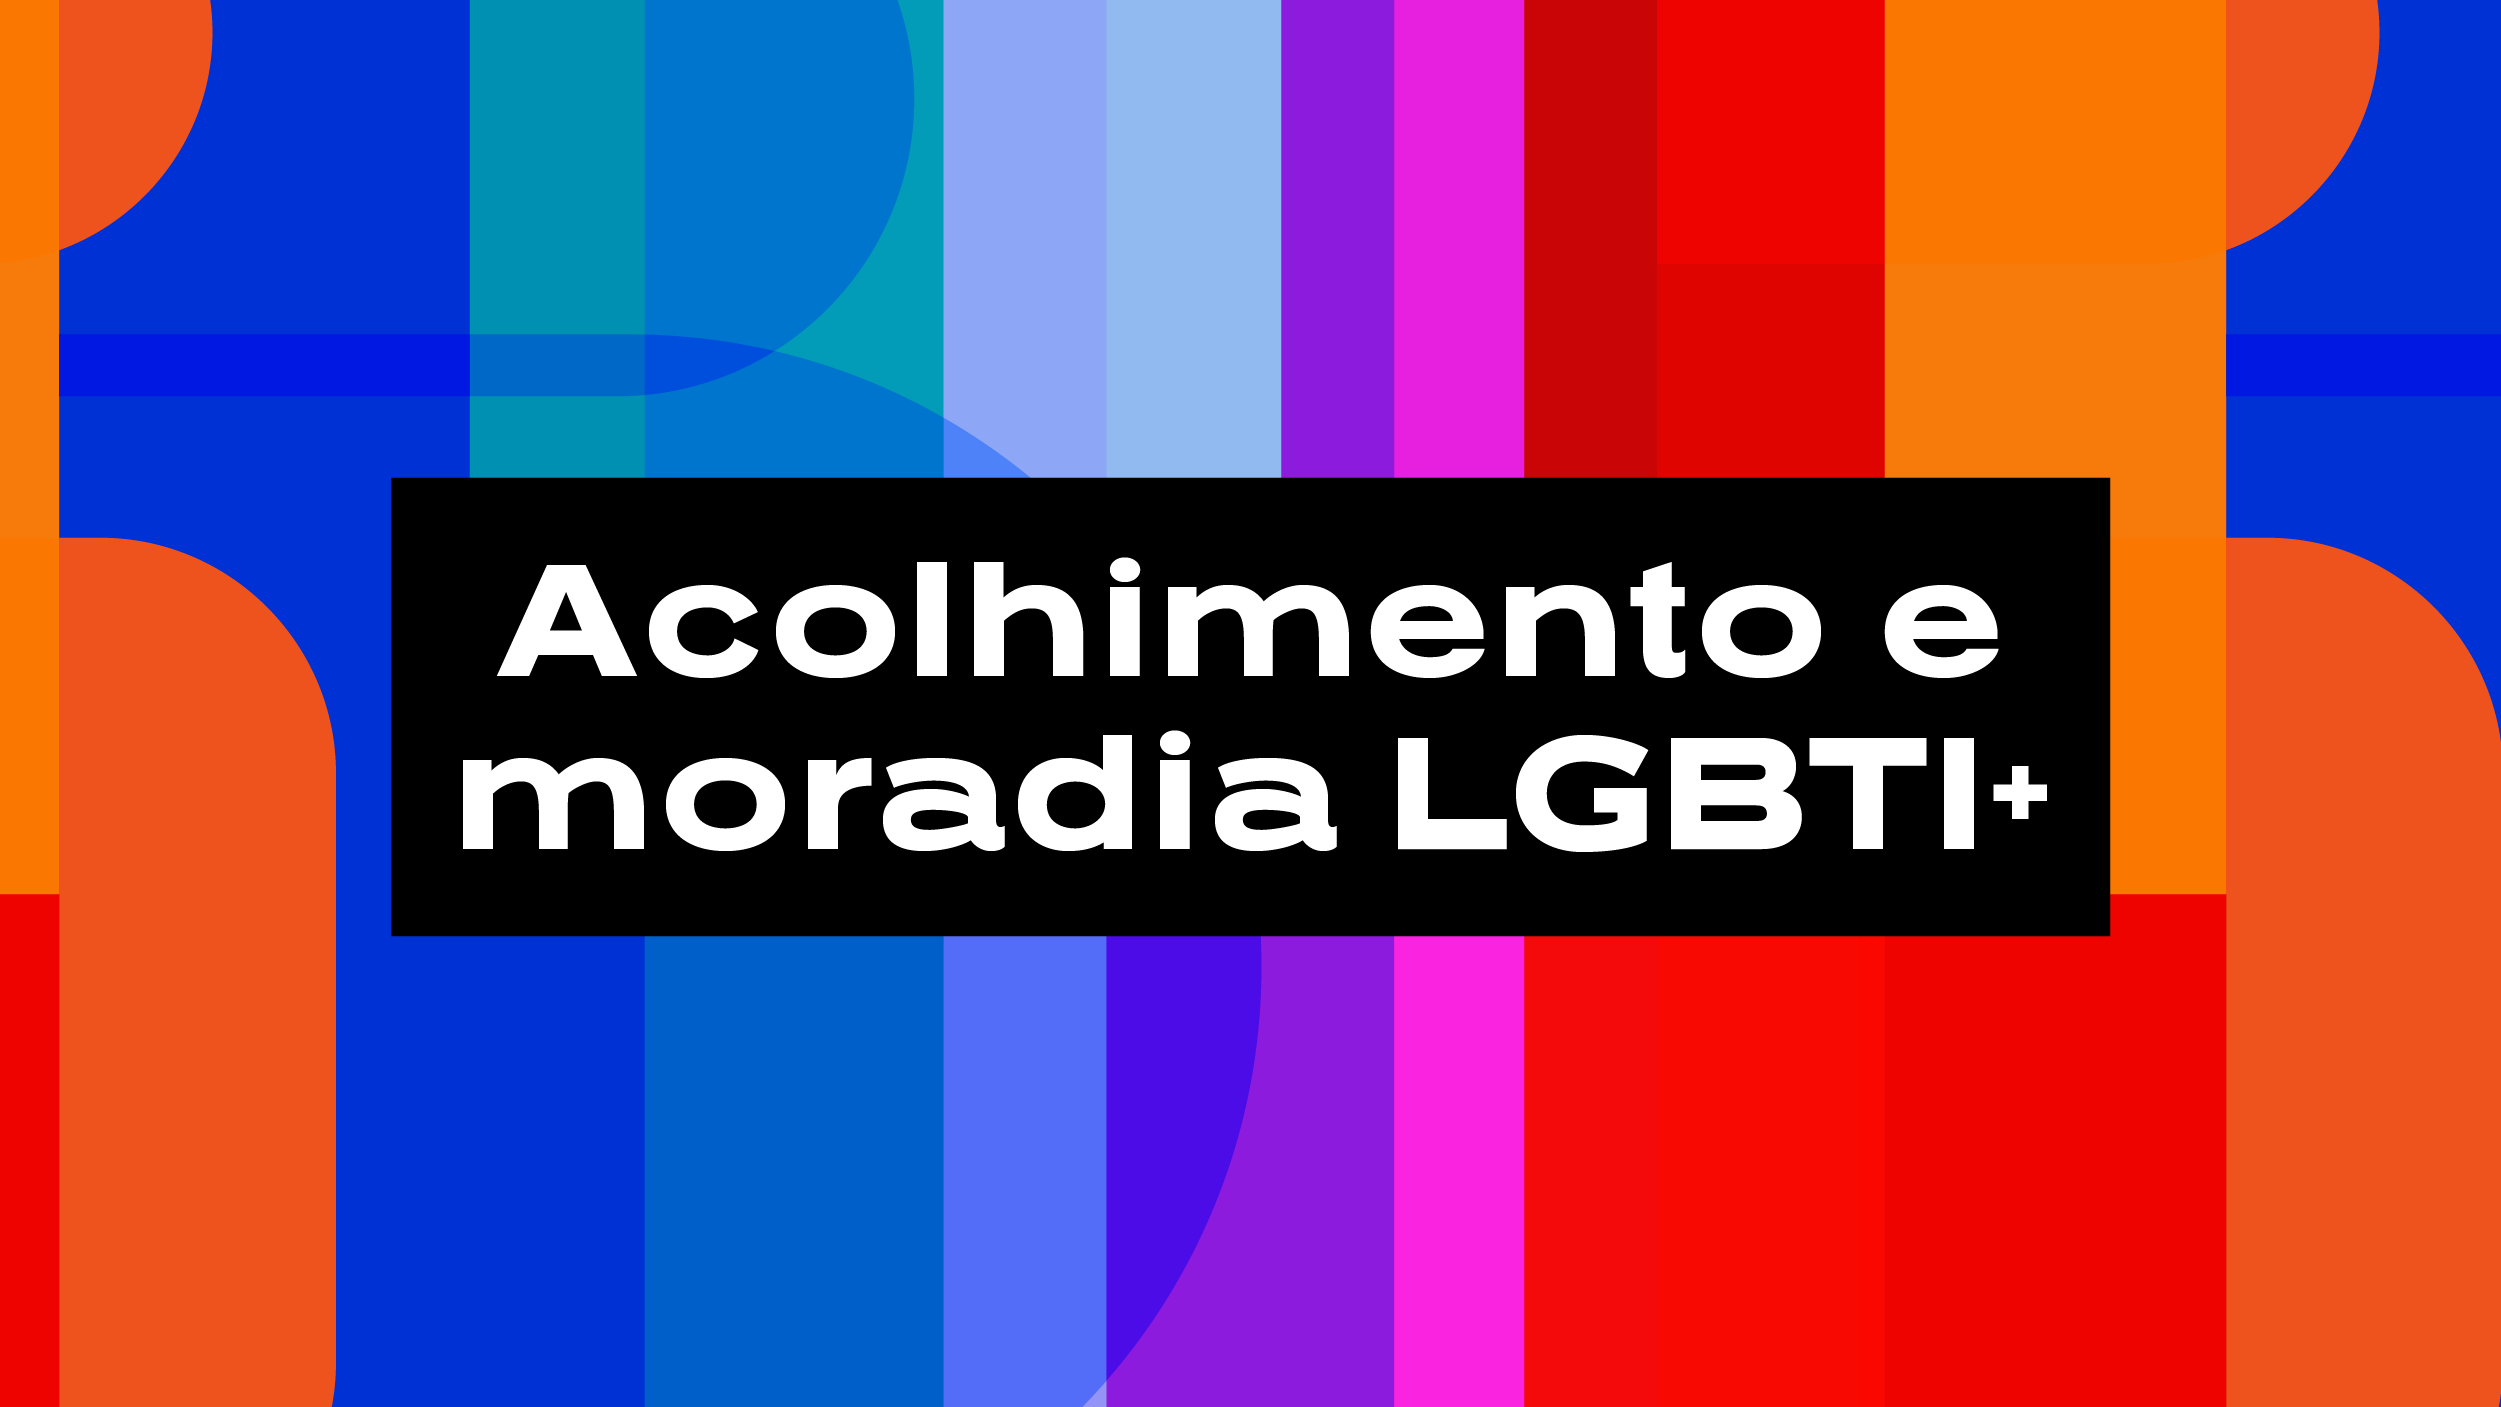 Mandato cria três casas de acolhimento LGBTI+